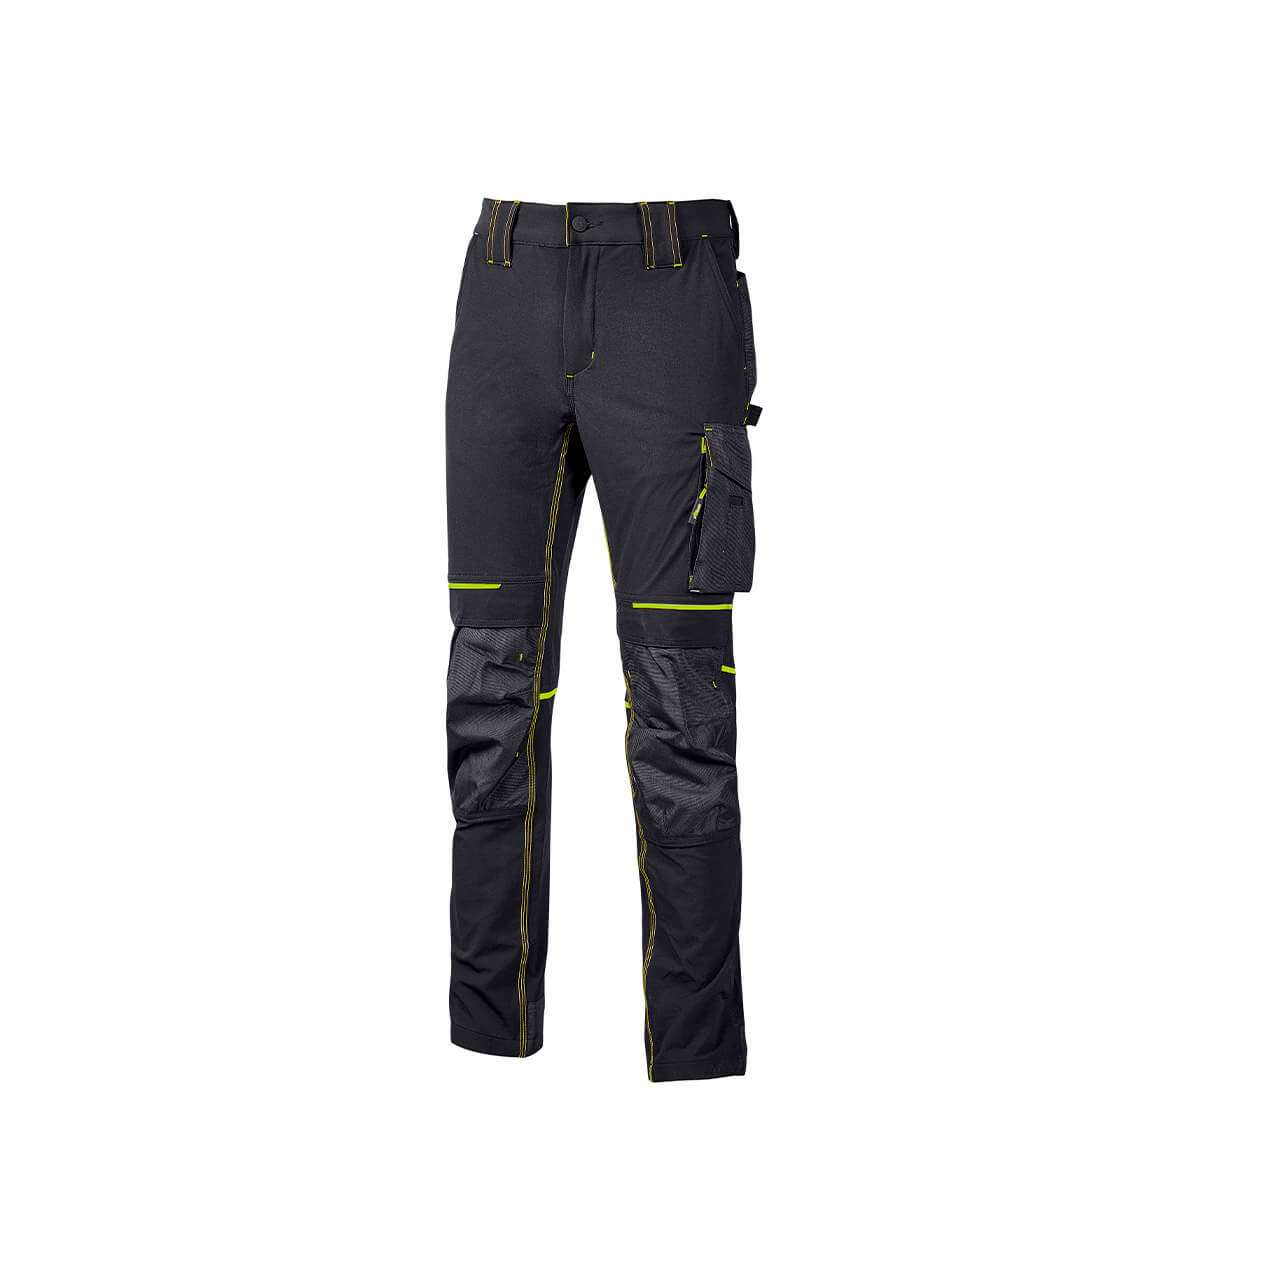 Pantalon ATOM Gris/Vert - U Power - Taille 2XL 6